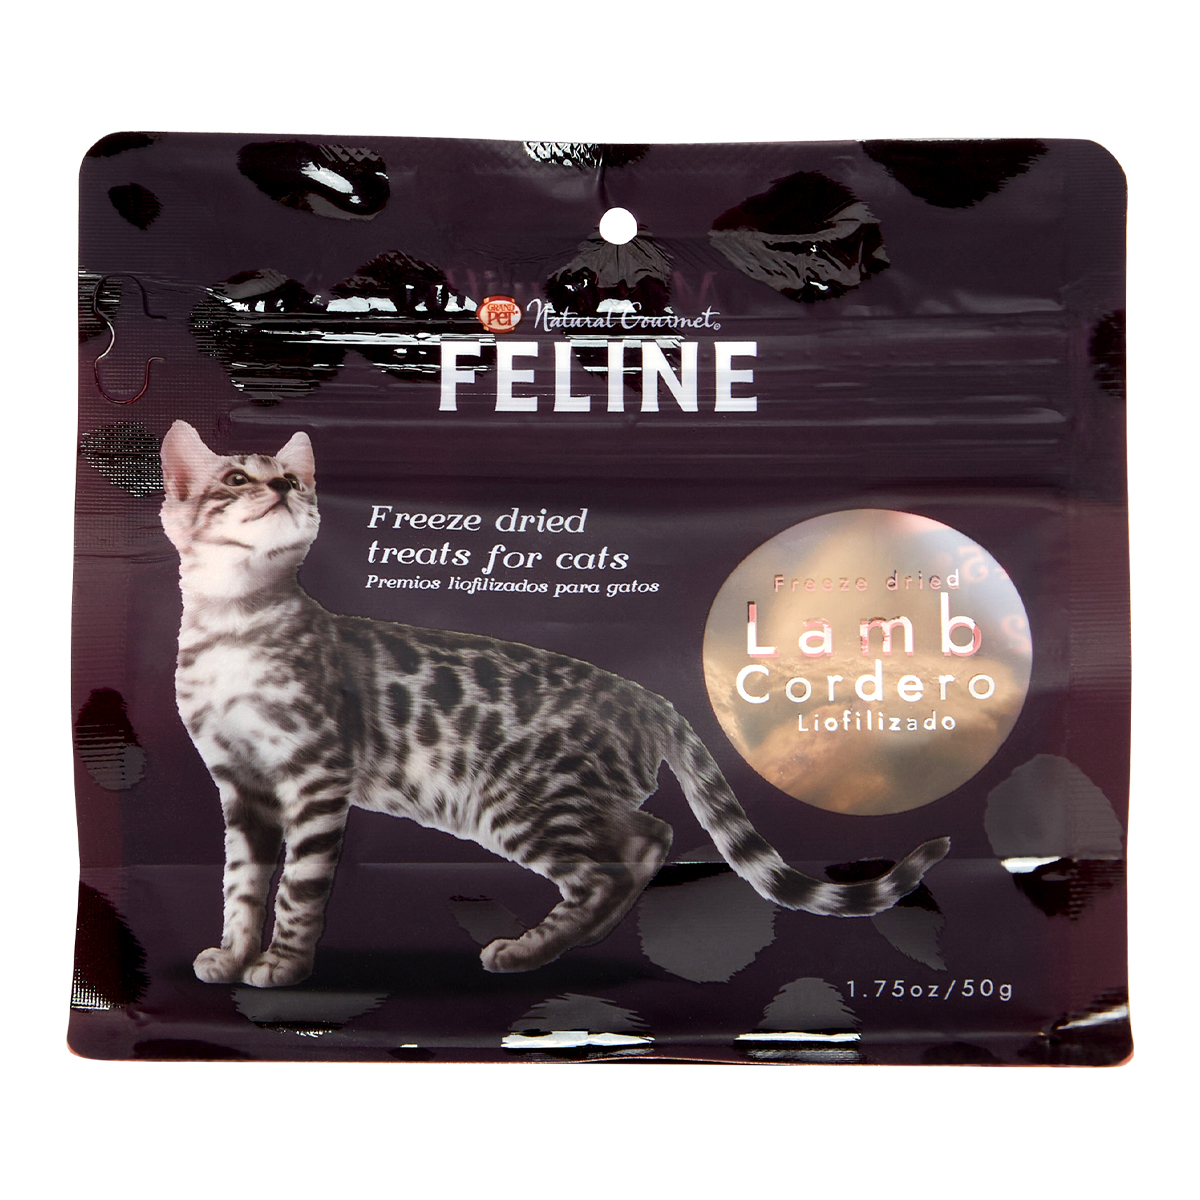 Natural Gourmet Feline Premios Liofilizados para Gato Receta Cordero, 50 g